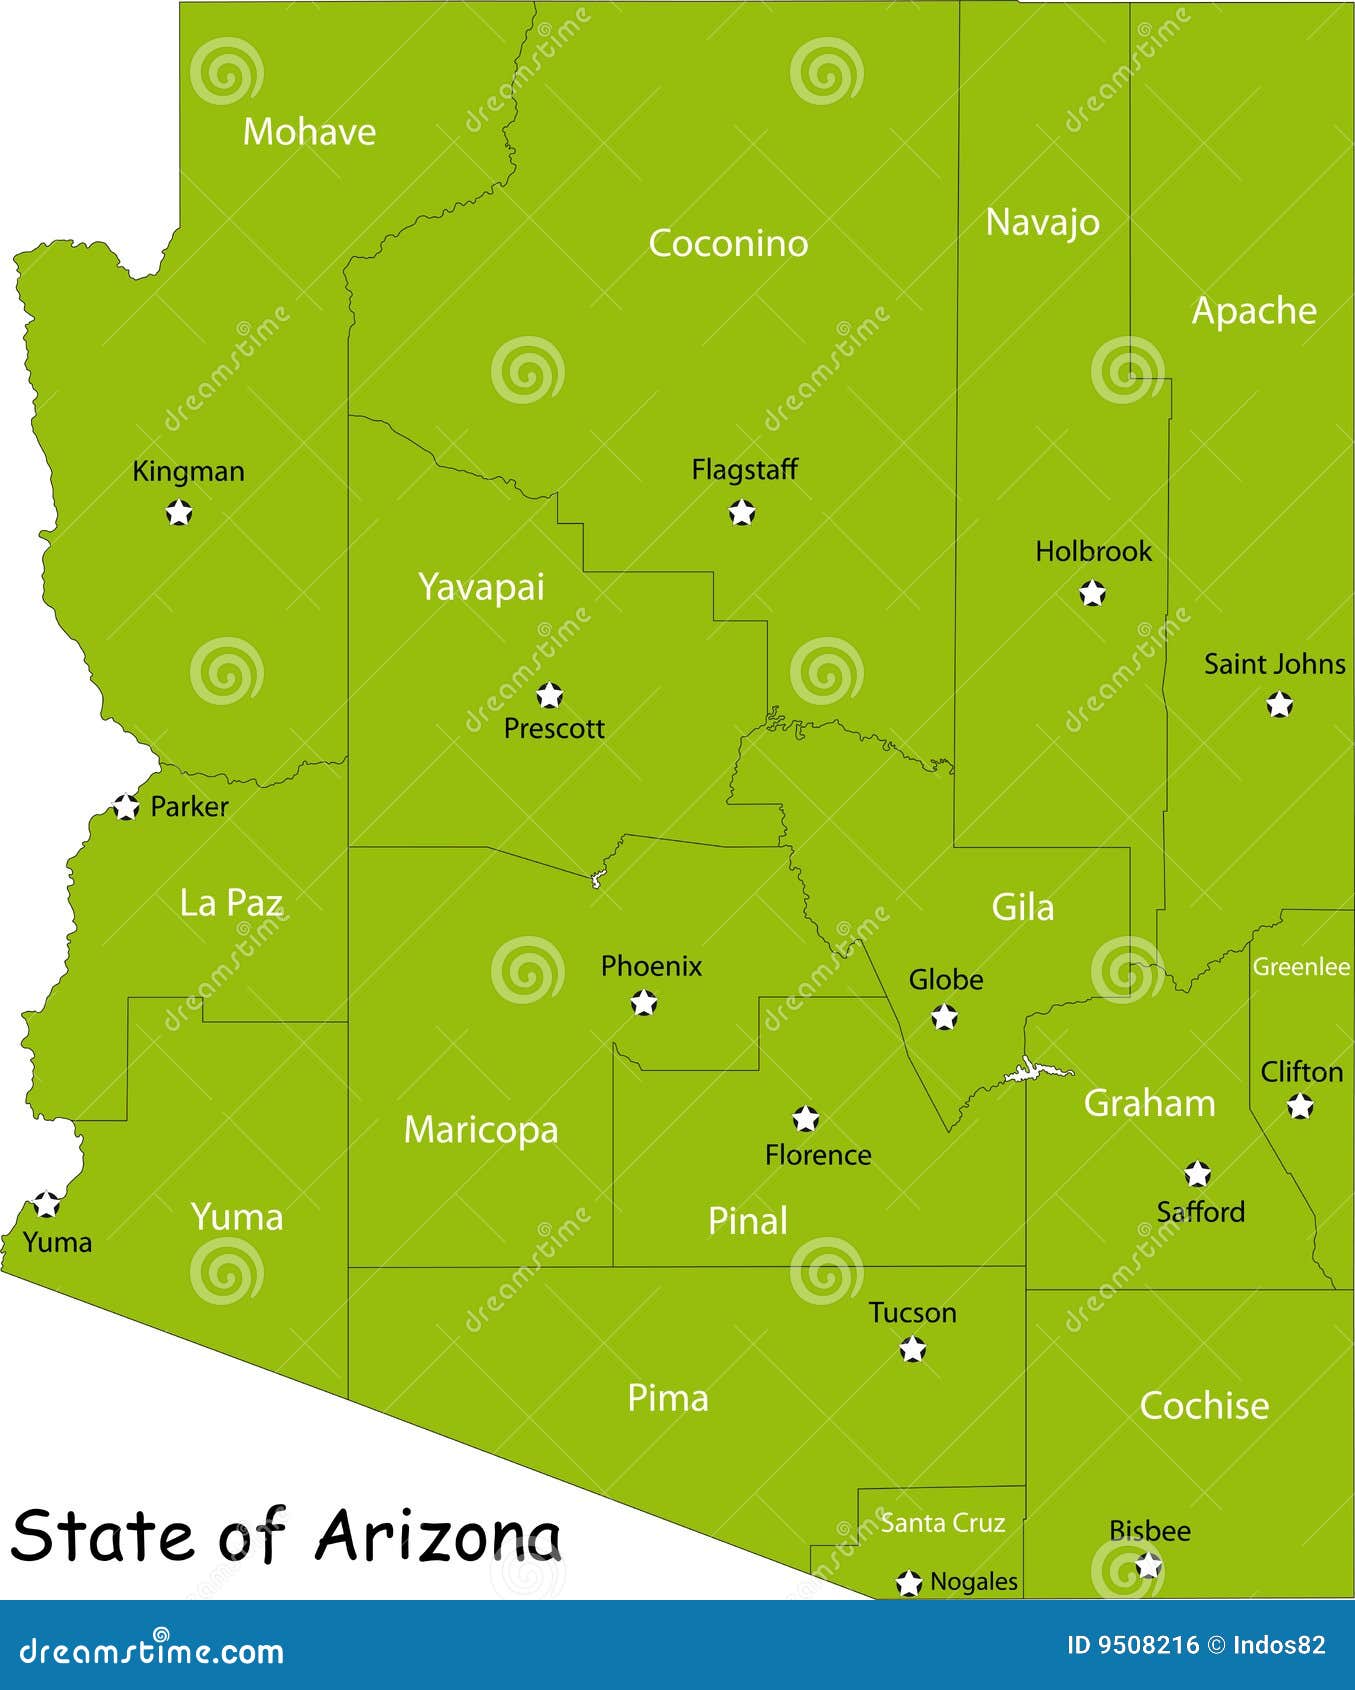 clipart map of arizona - photo #16